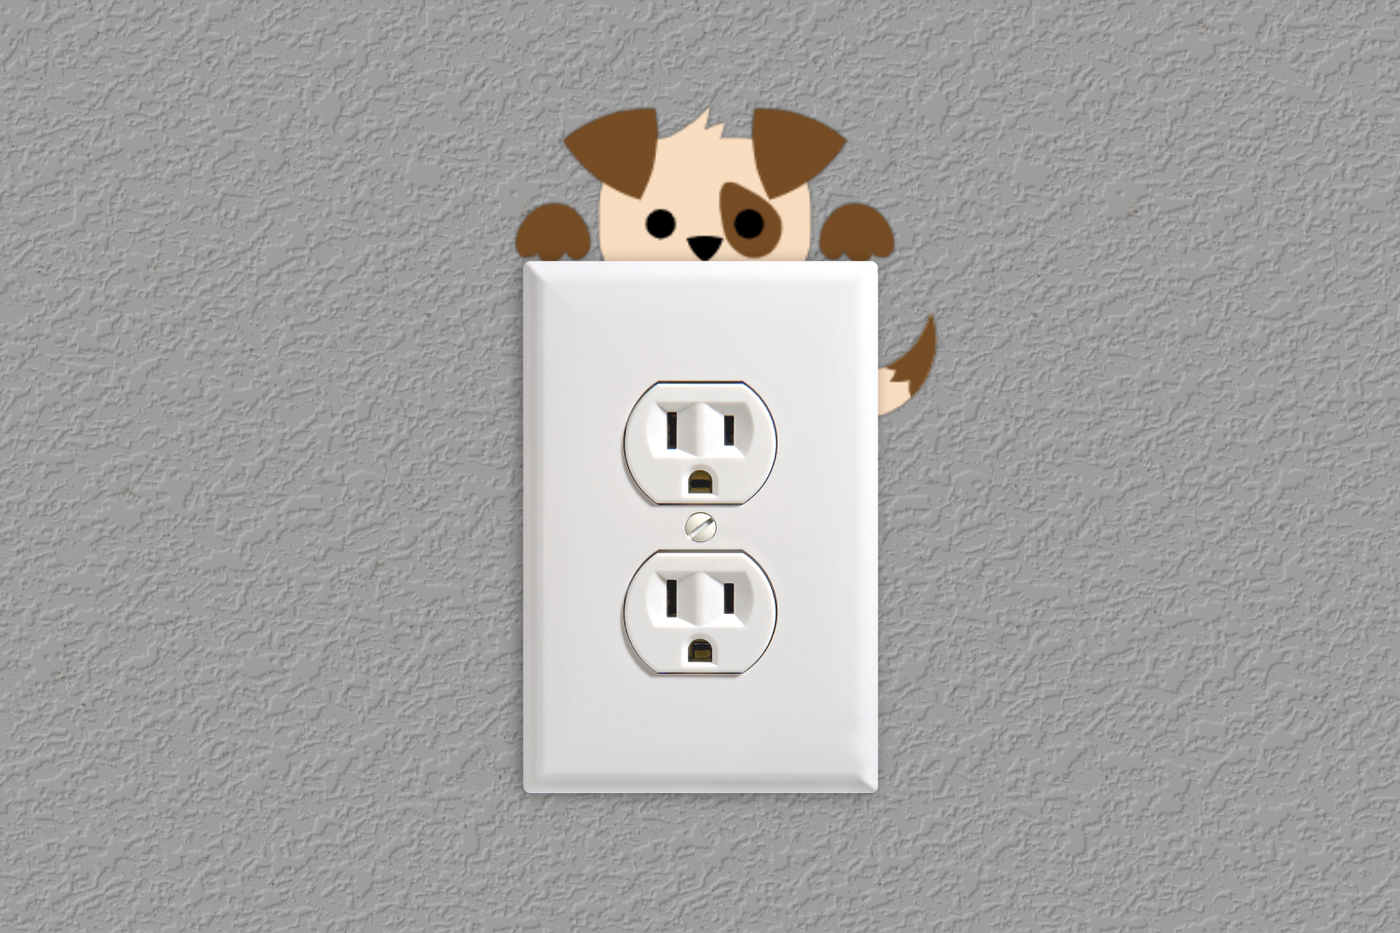 Dog light switch or outlet design